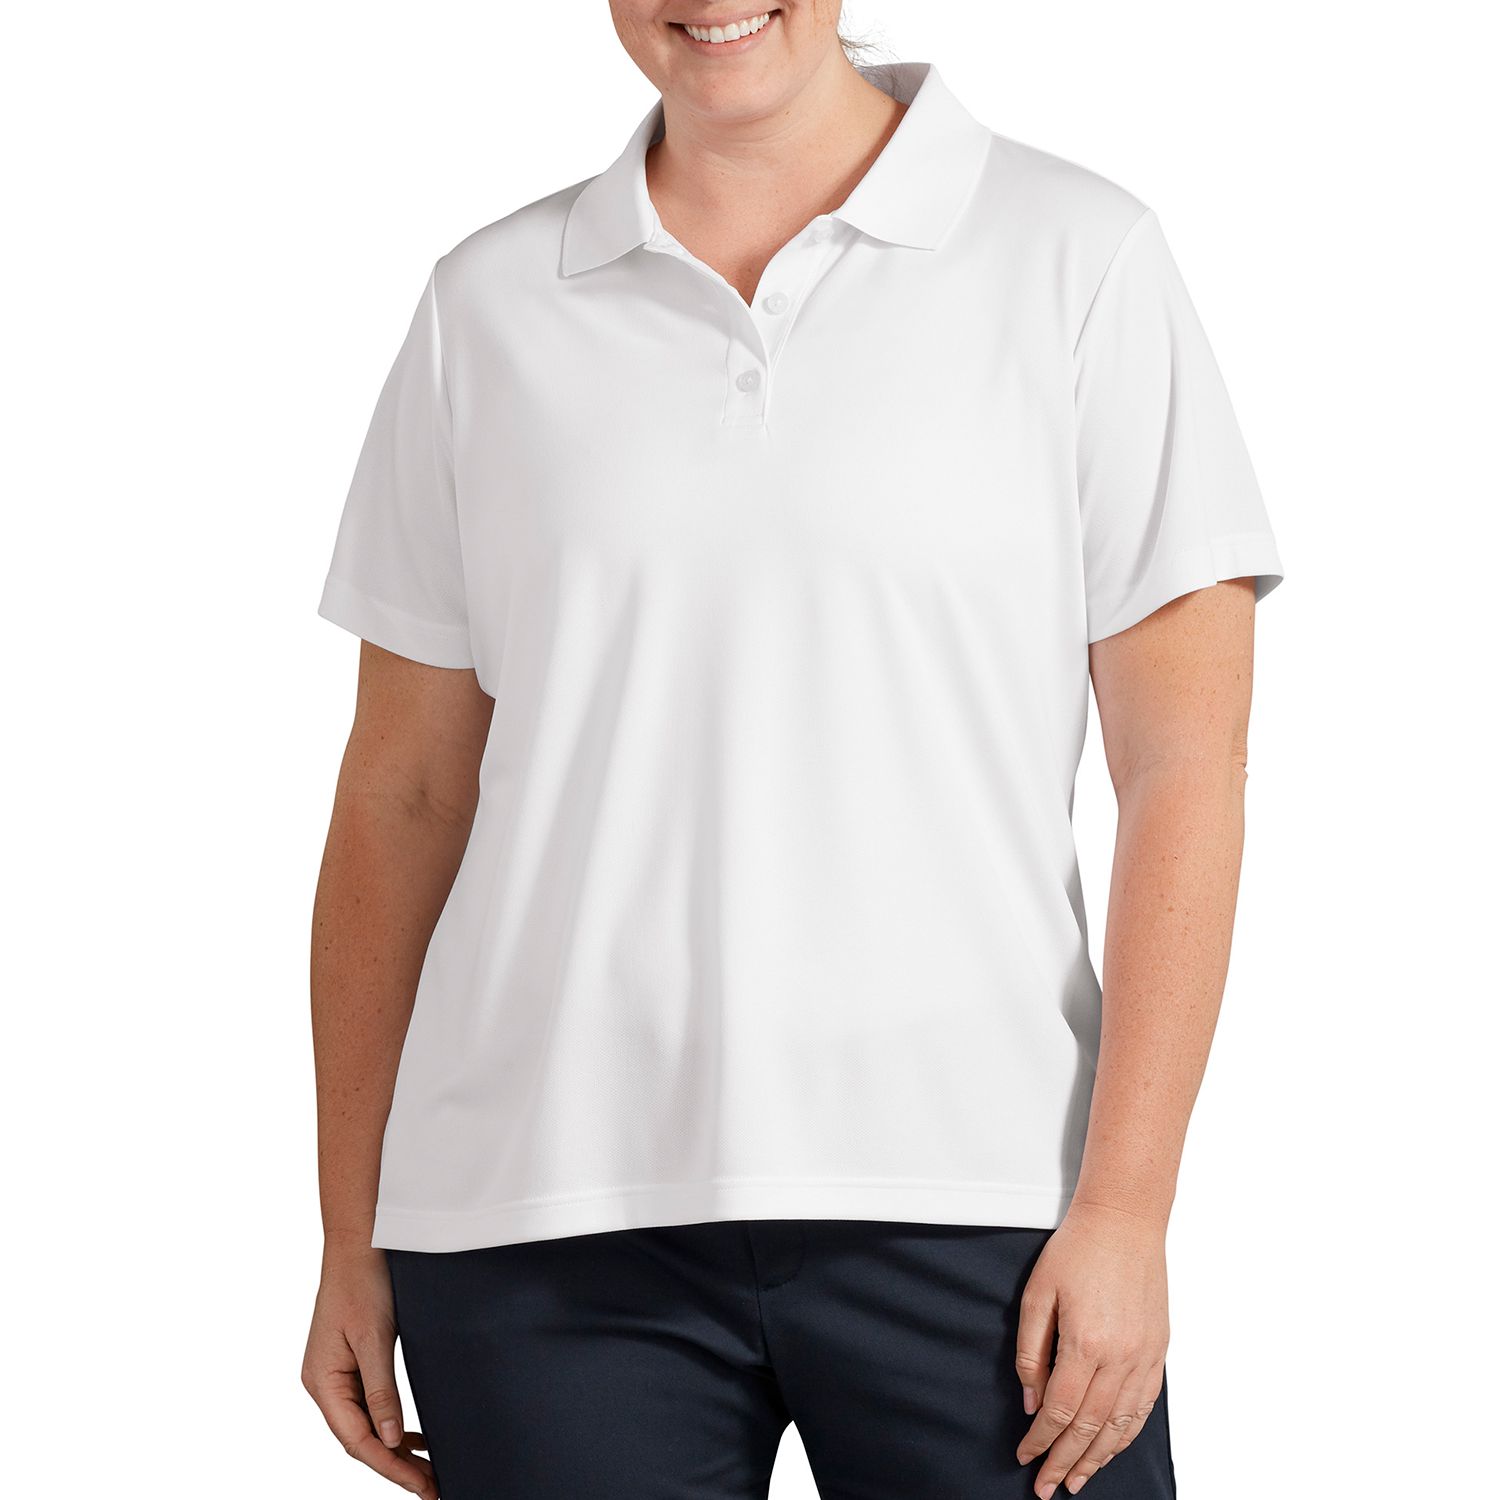 hanes women's plus size polo shirts